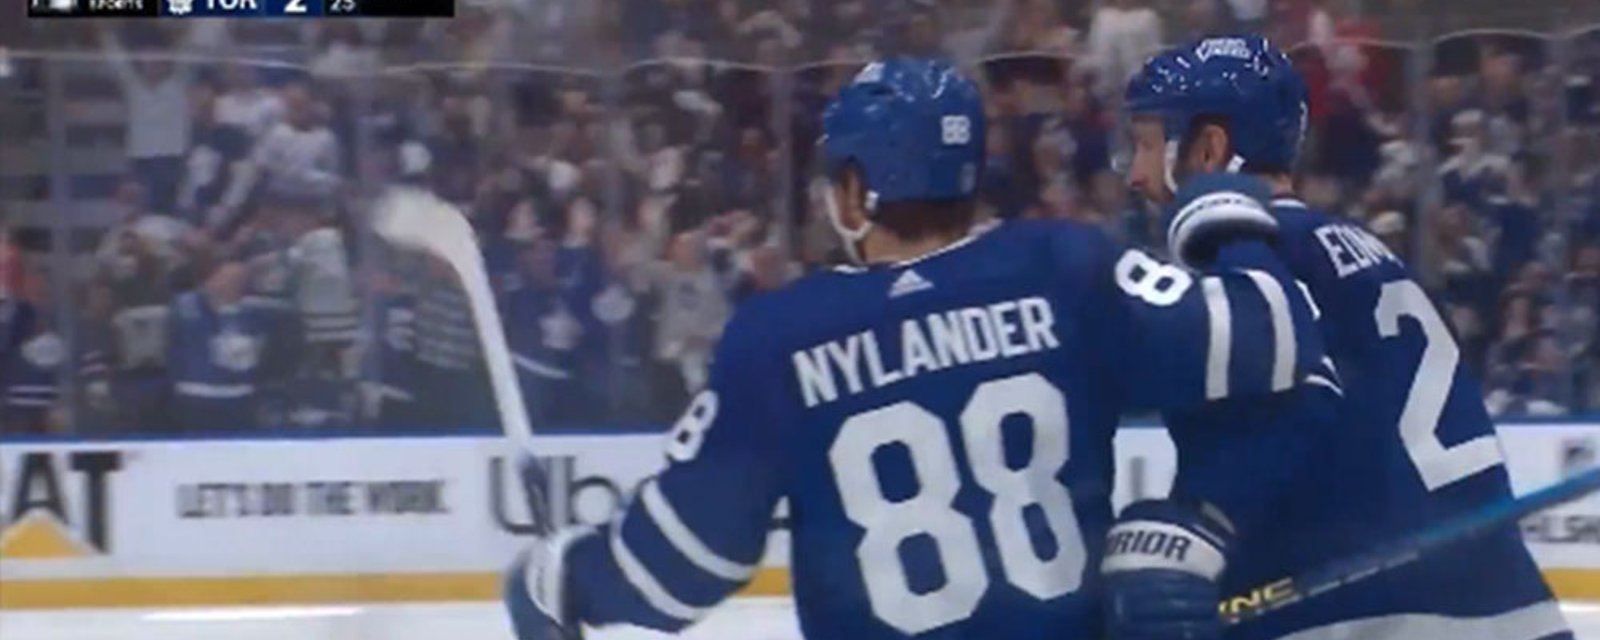 Nylander delivers Game 7 for Leafs fans in epic fashion